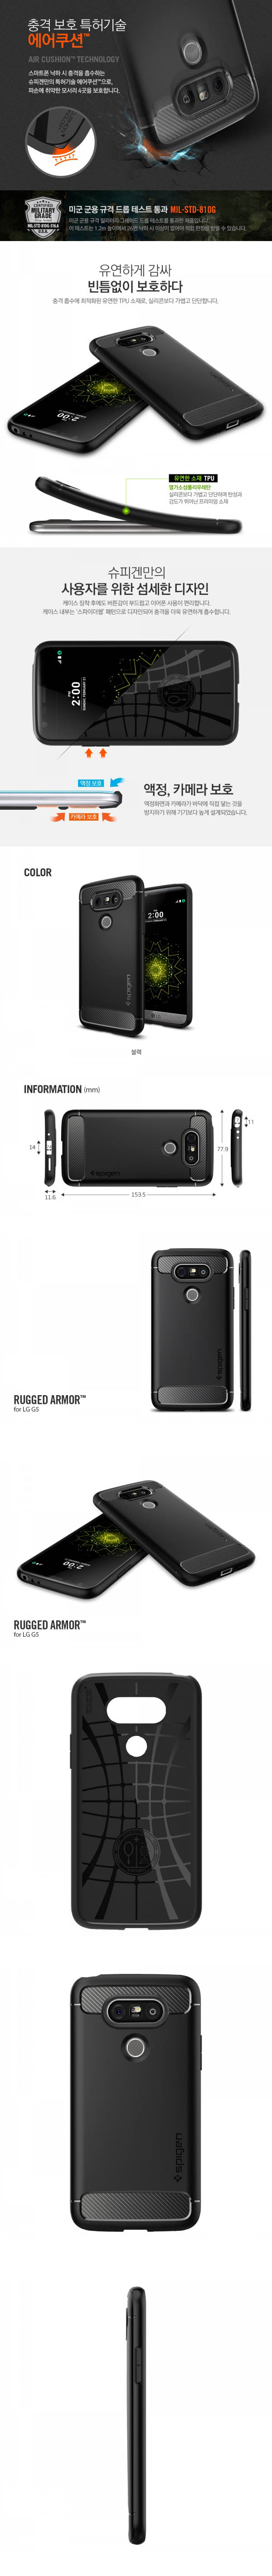 Ốp lưng LG G5 Spigen Rugged Armor nhựa mềm 3